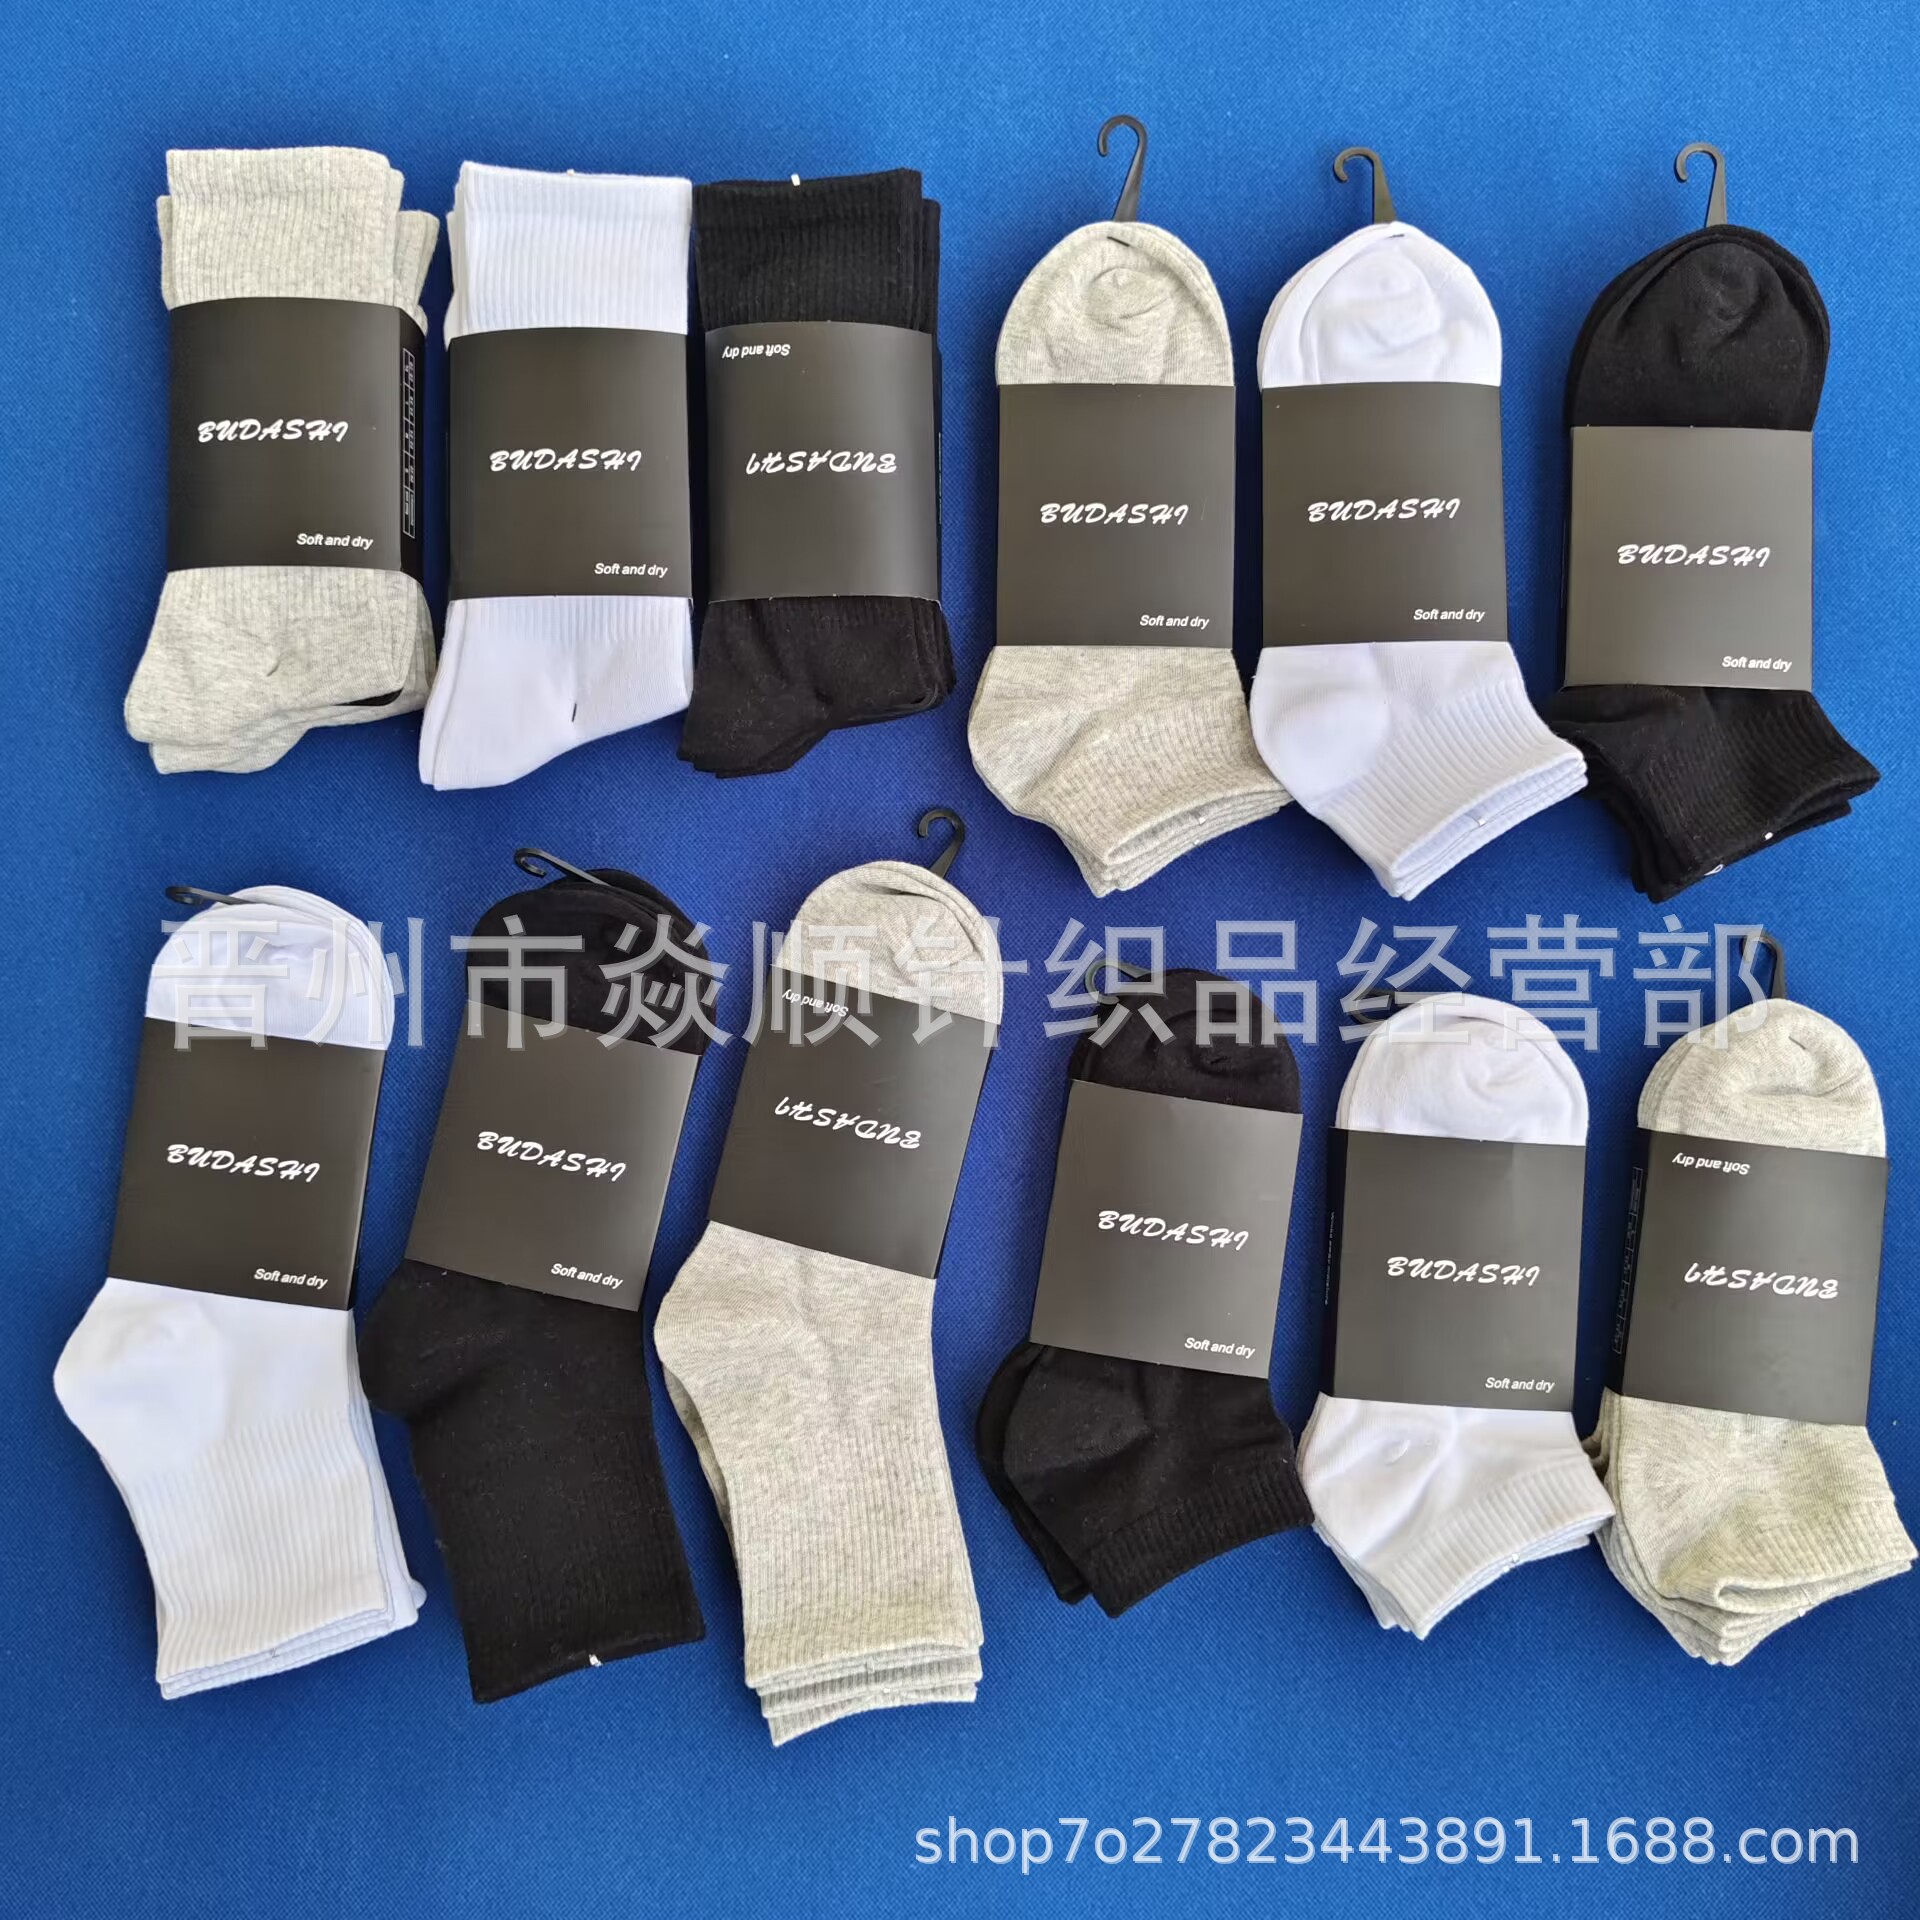 New Men's and Women's Cotton Sock Fashionable Black, White and Gray All-Match Socks Mid-Calf and Long Length Socks for Running Basketball Socks Couple Socks